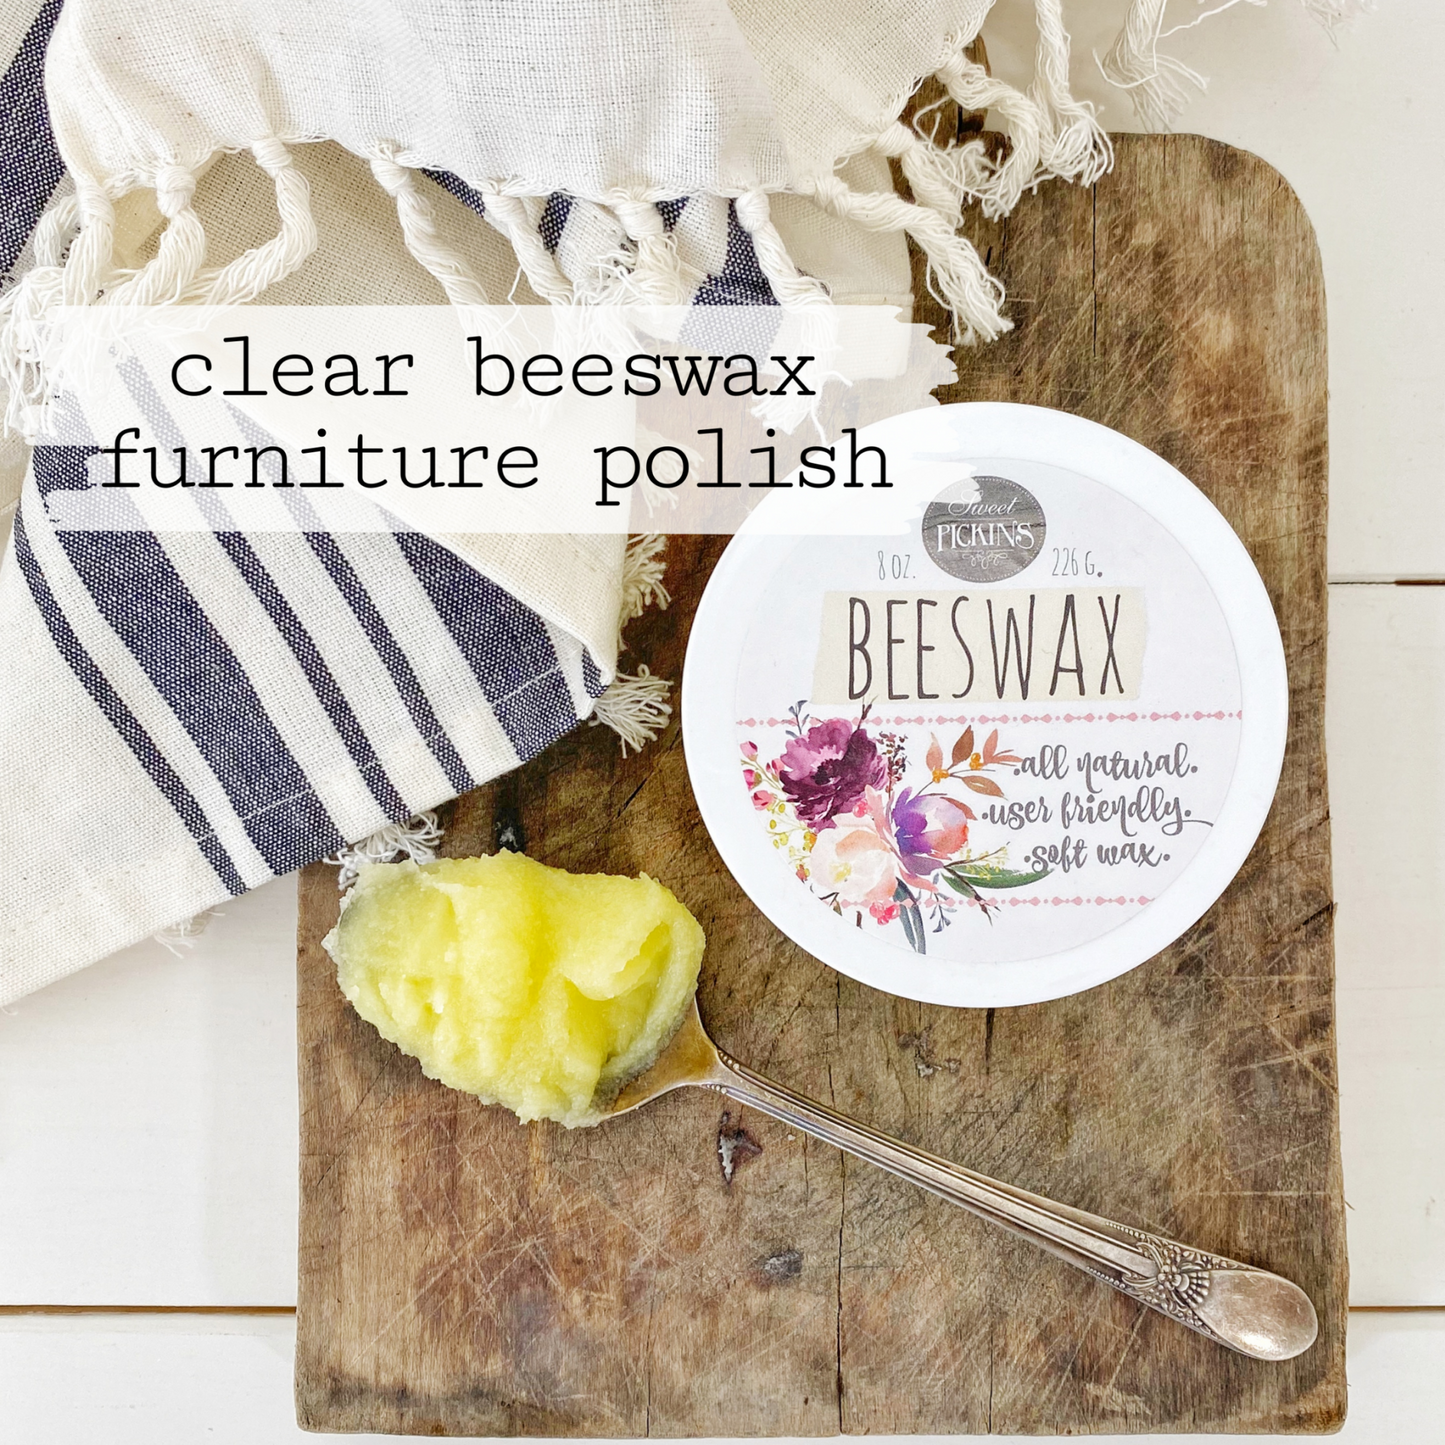 Sweet Pickins Beeswax Furniture Polish - Clear